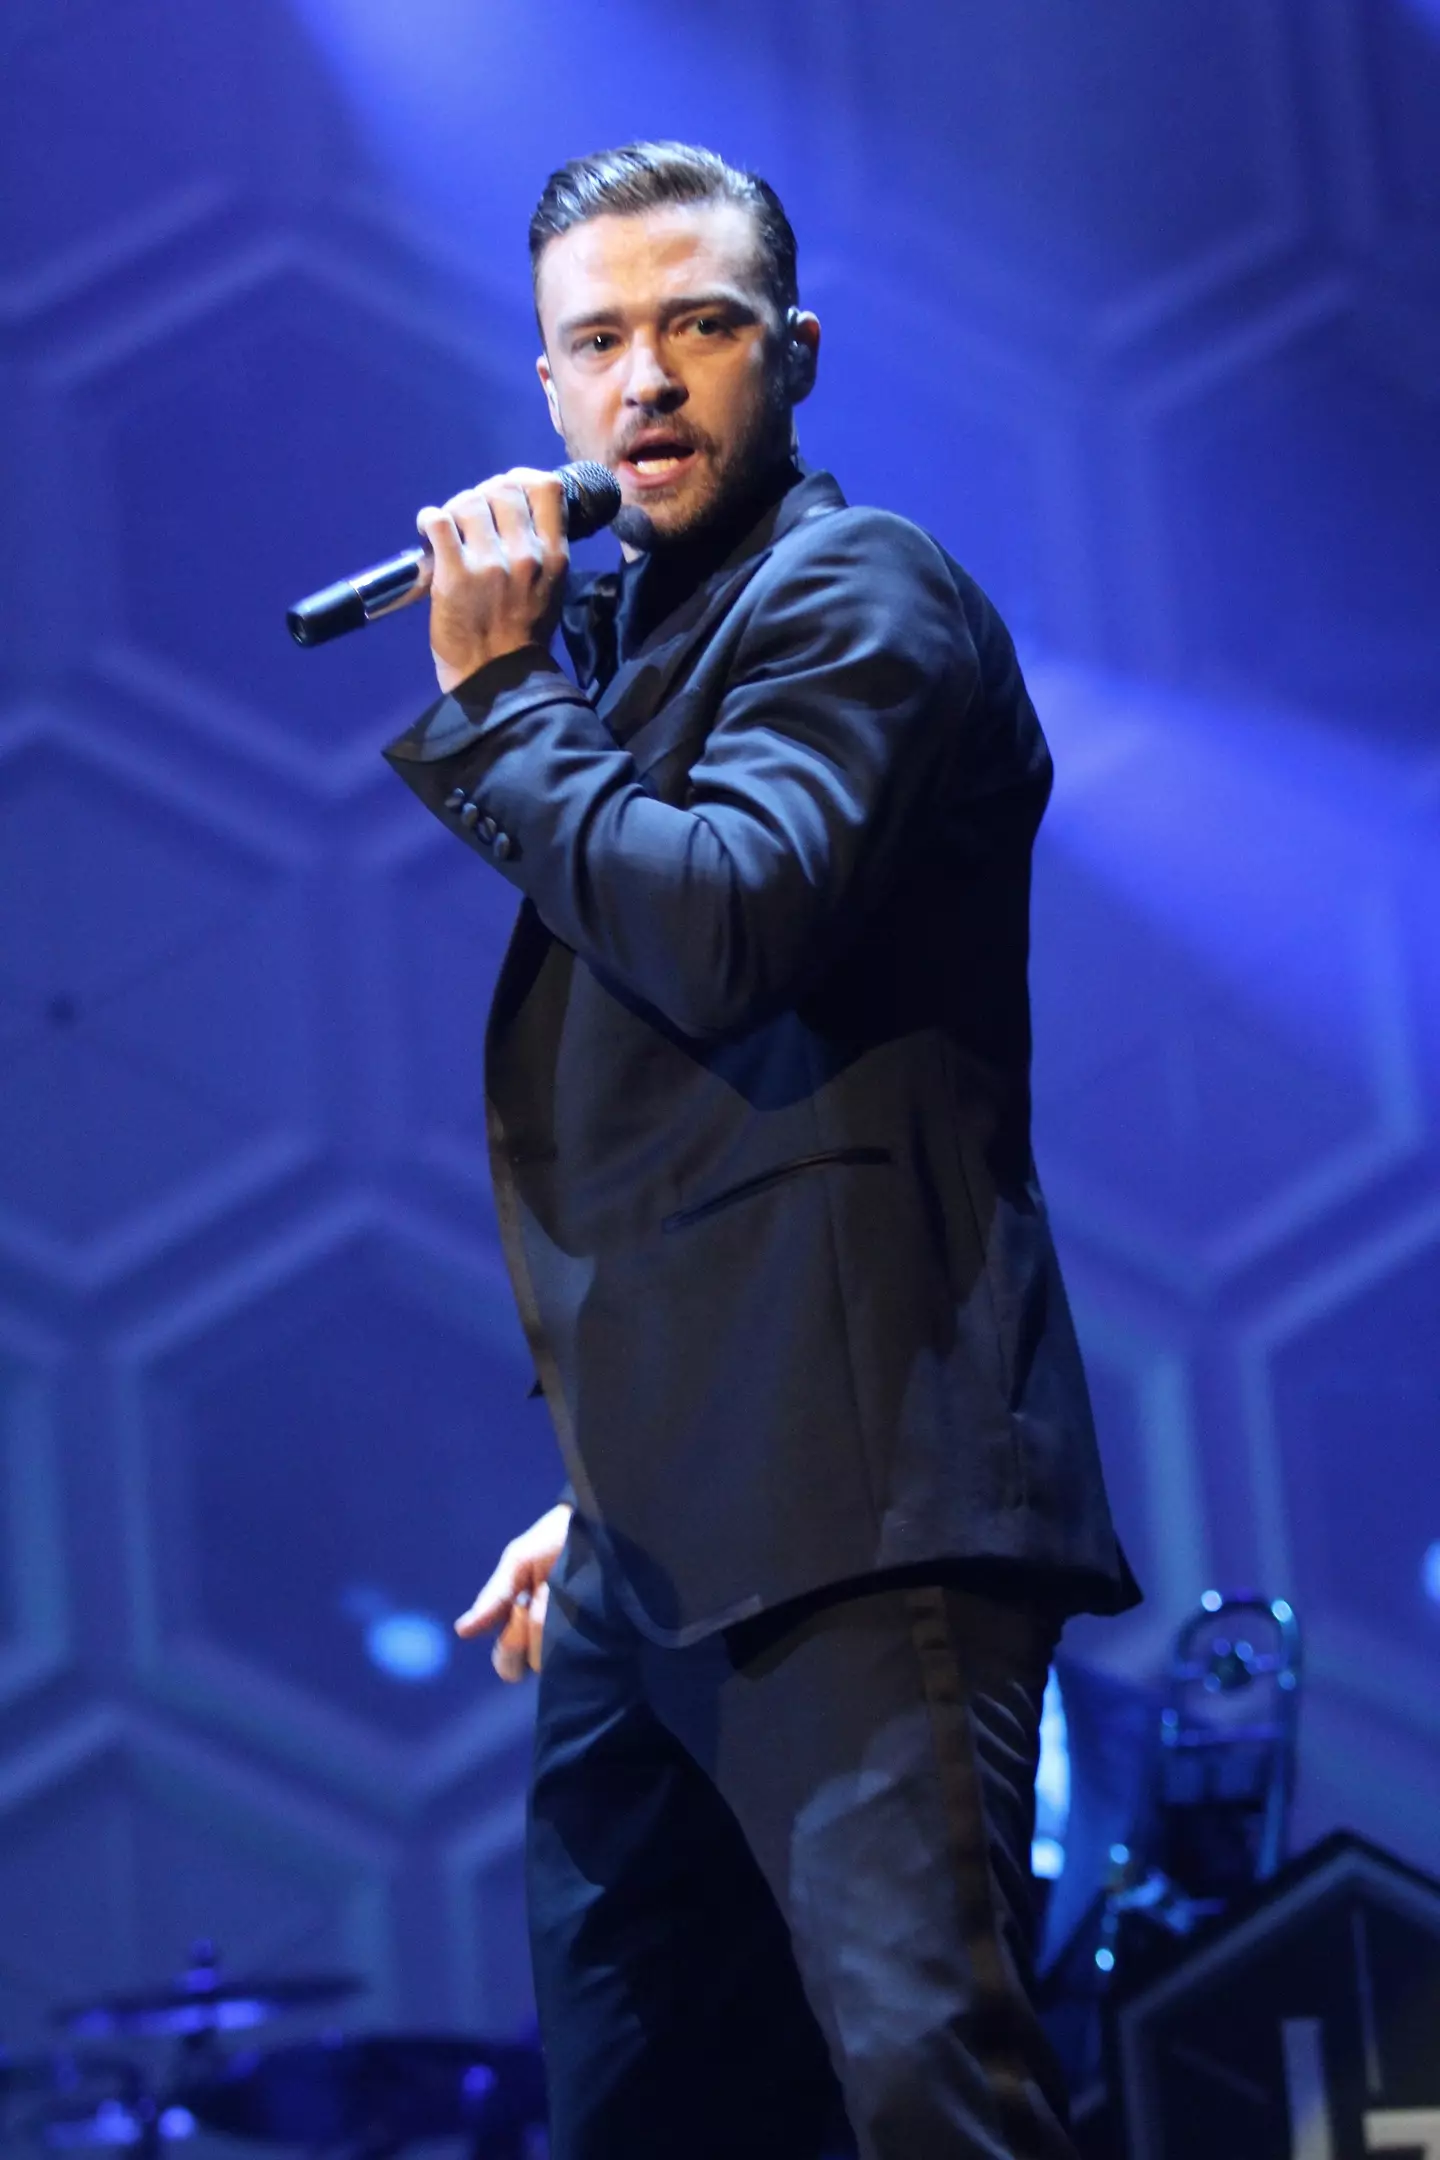 Justin Timberlake has sold off his song catalogue.